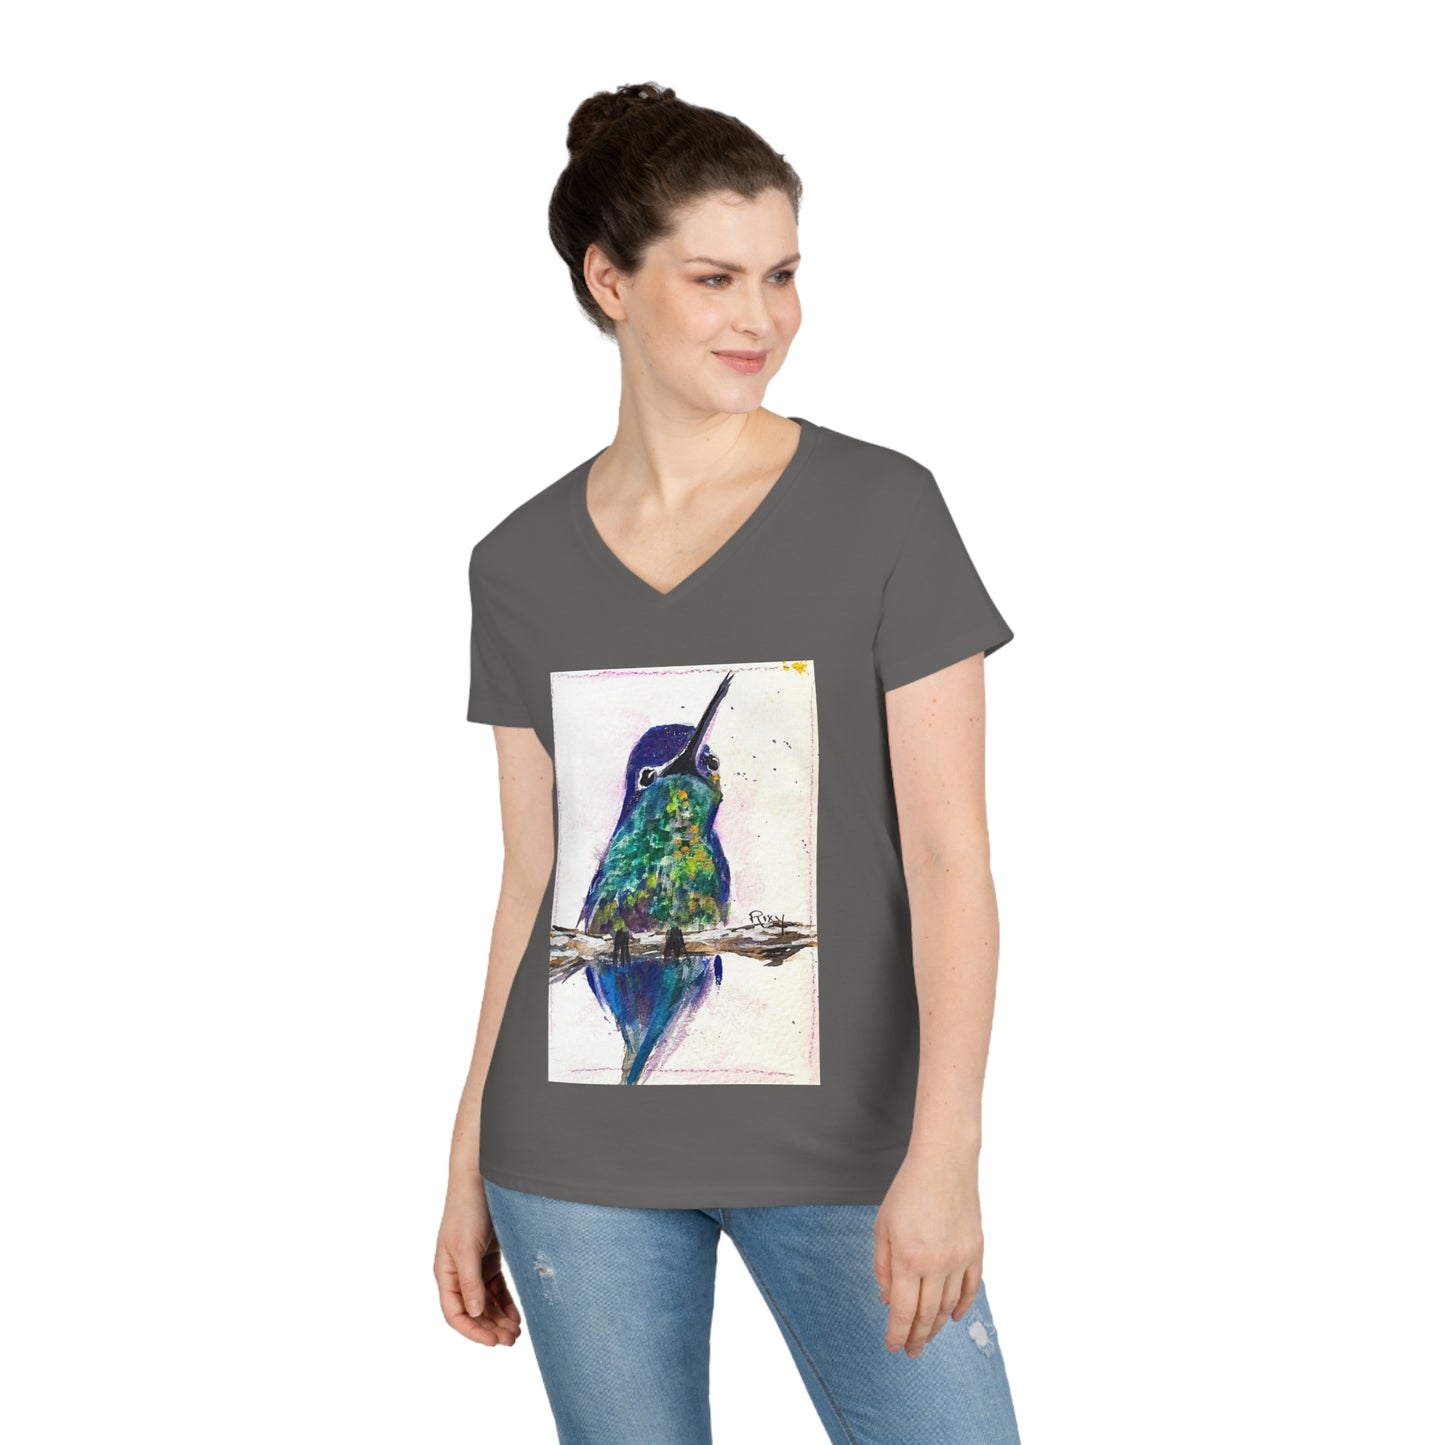 Adorable Buff-Bellied Hummingbird Ladies' V-Neck T-Shirt